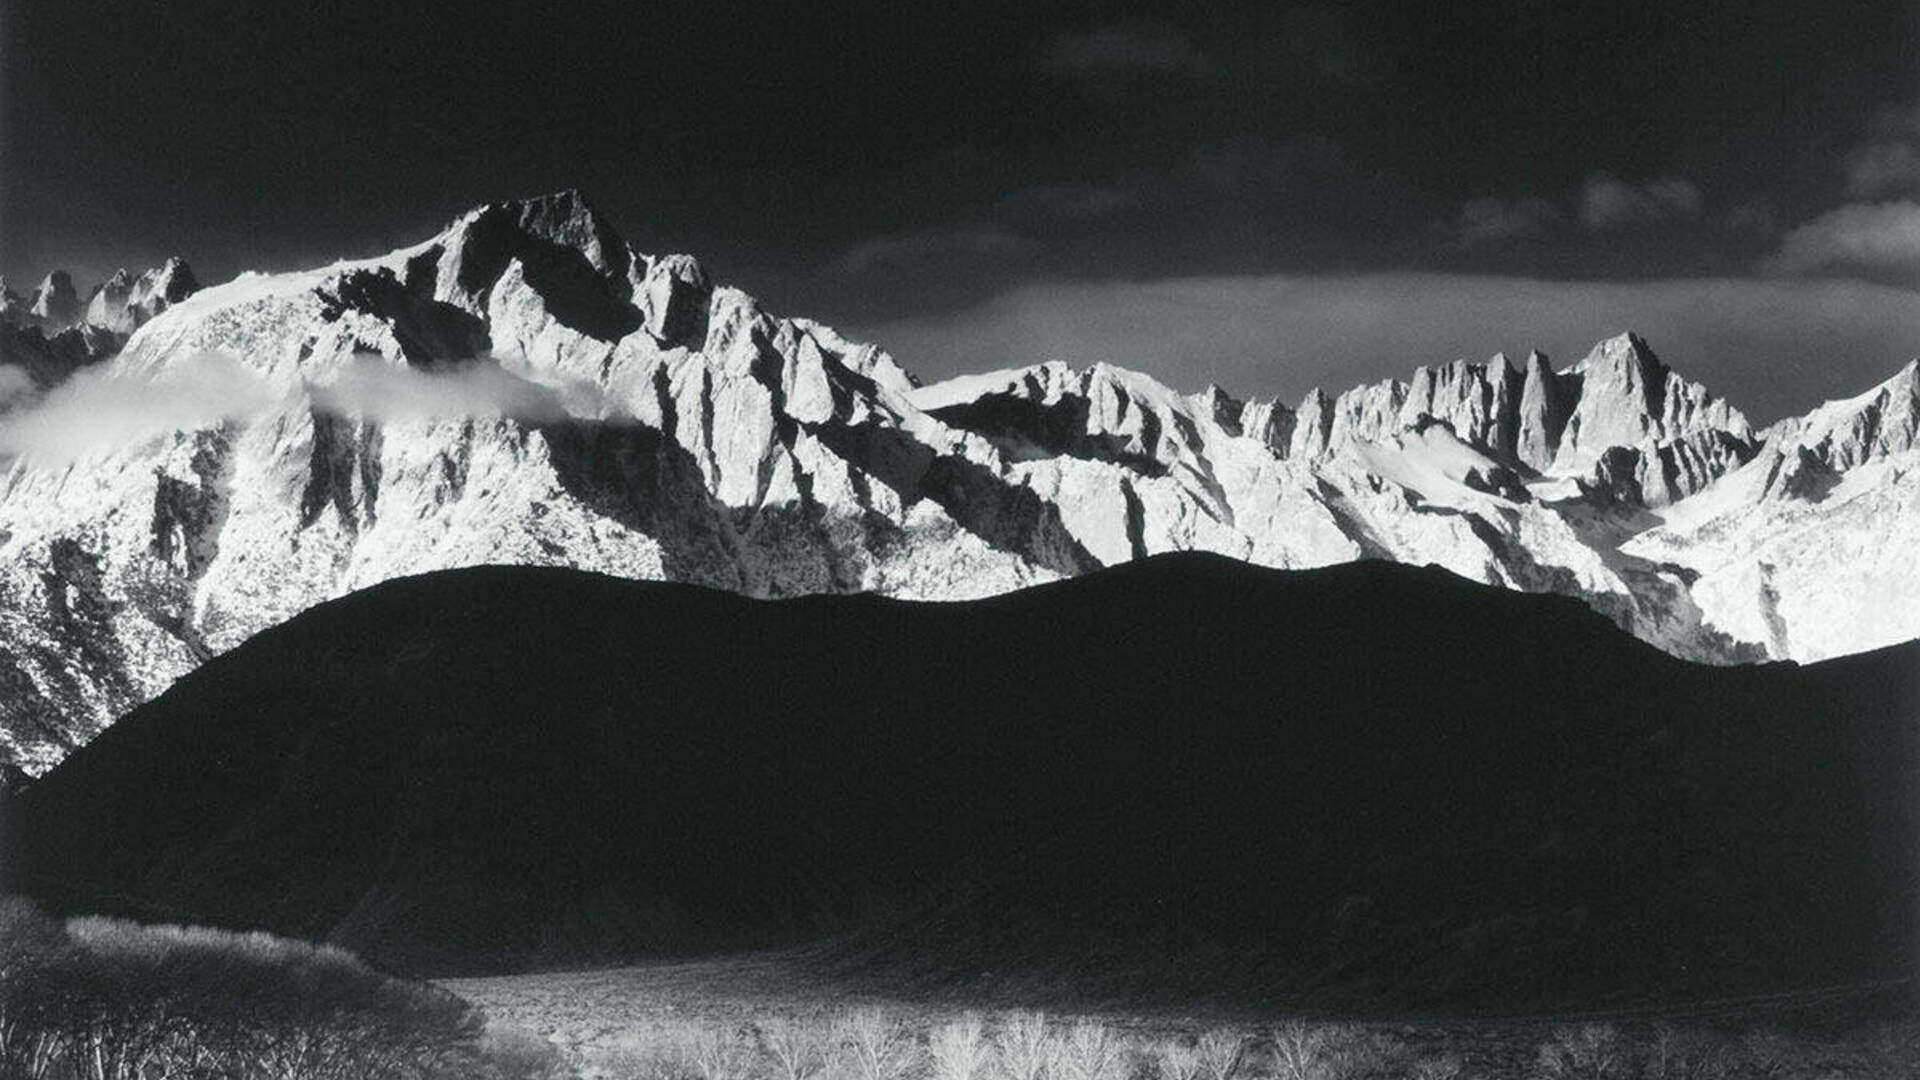 Ansel Adams (American, 1902-1984), Winter Sunrise, Sierra Nevada from Lone Pine, California, 1944, gelatin silver print. Mrs. Lorraine Gallagher Friemann Fund, 1975.066. ©2013 Ansel Adams Publishing RIghts Trust.